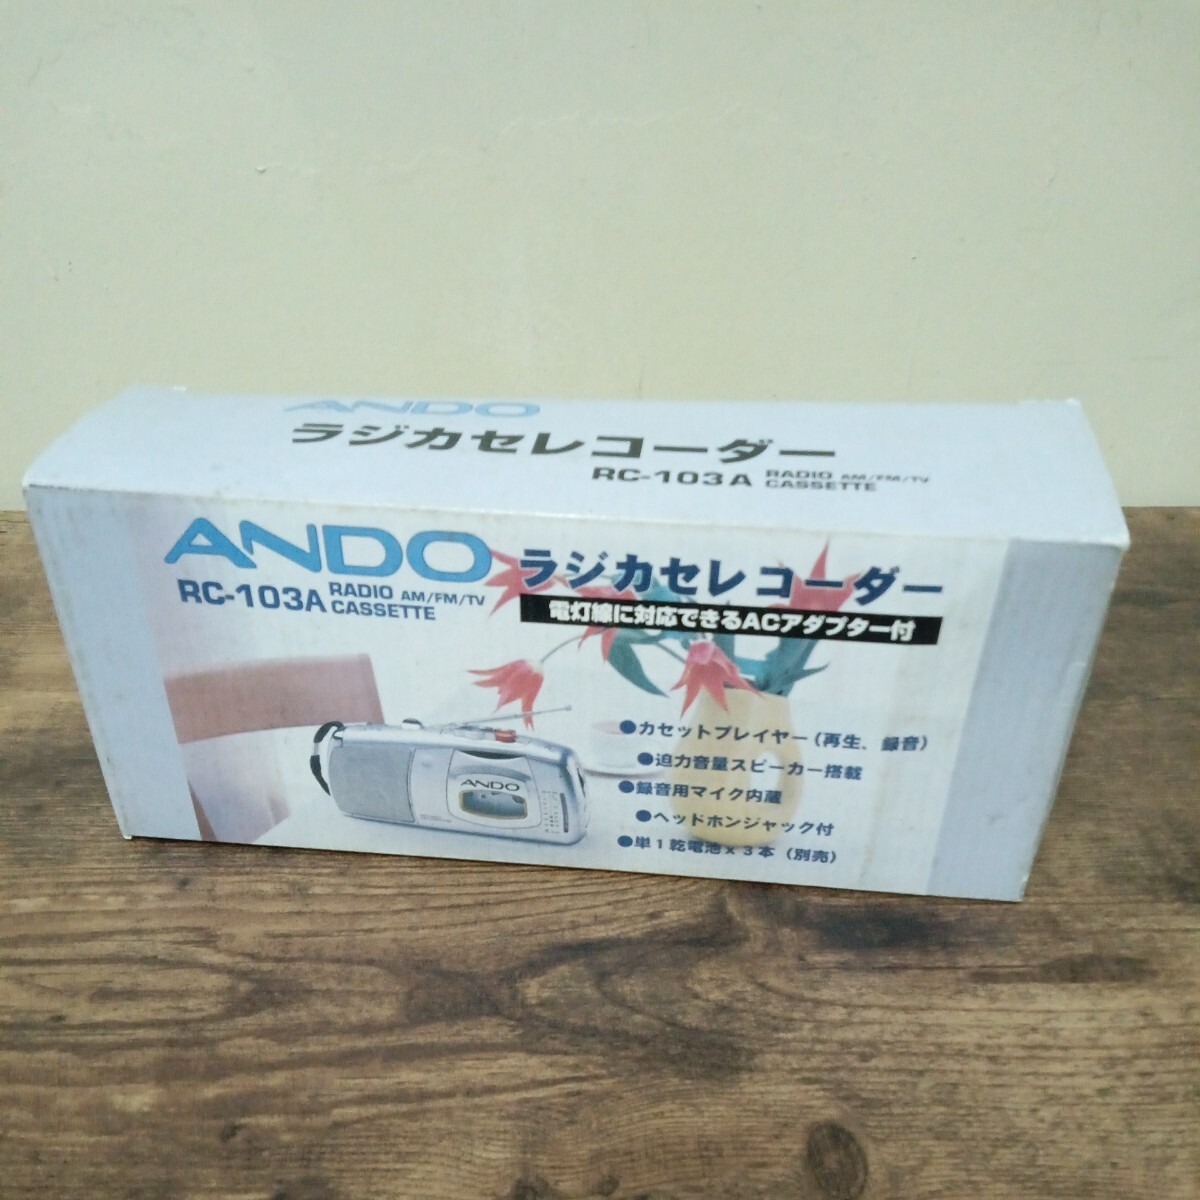 ANDO compact radio-cassette RC-103A unused goods 